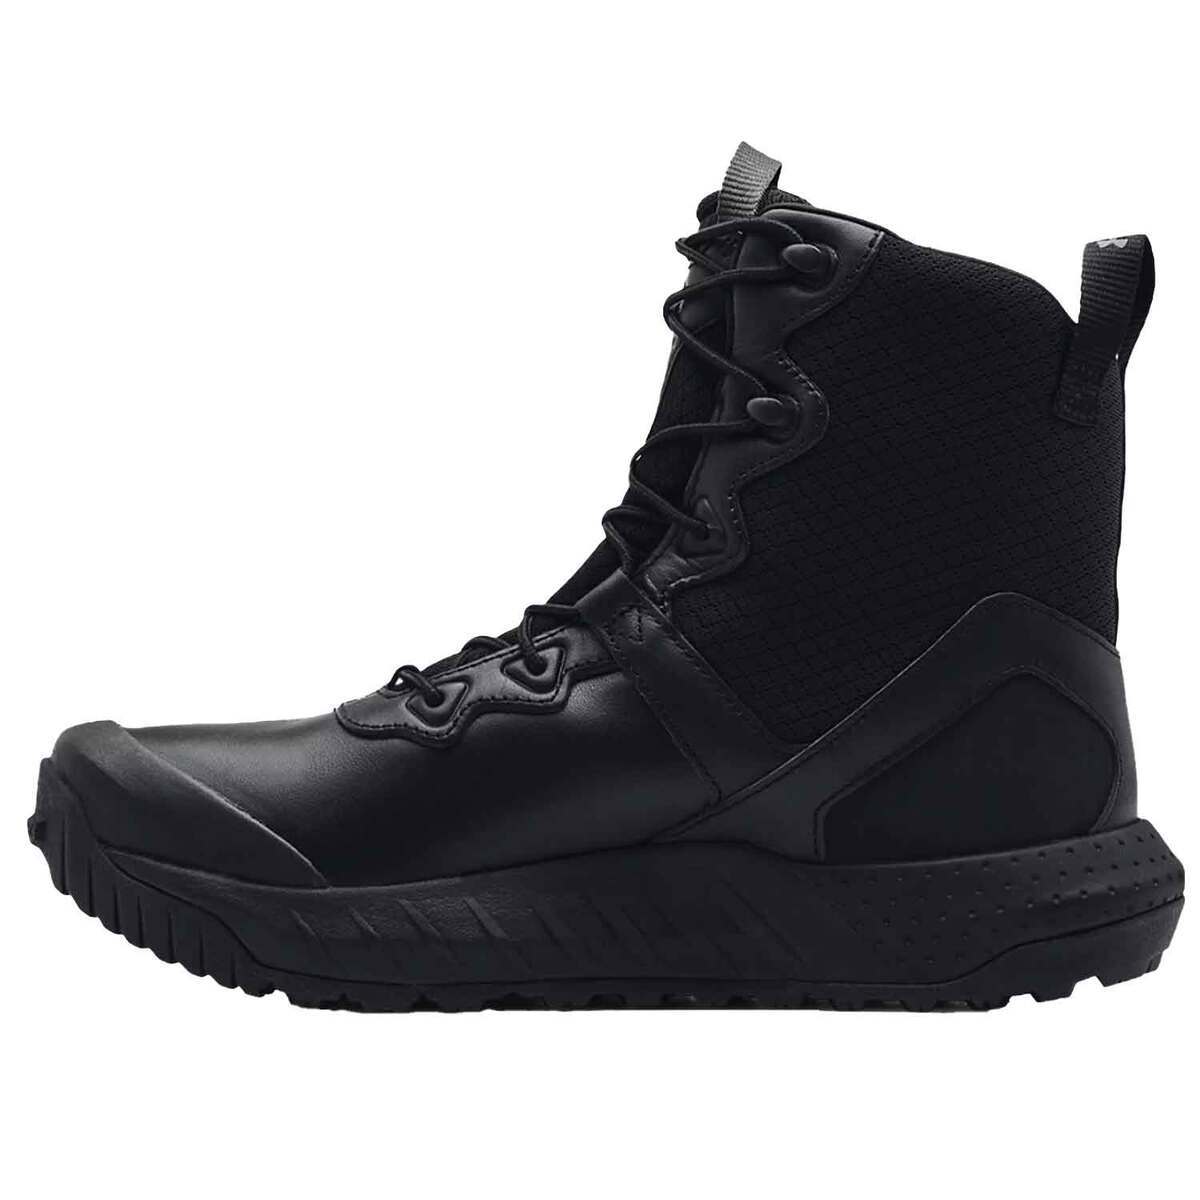 Under Armour Men's Micro G Valsetz Leather Tactical Boots | Sportsman's ...